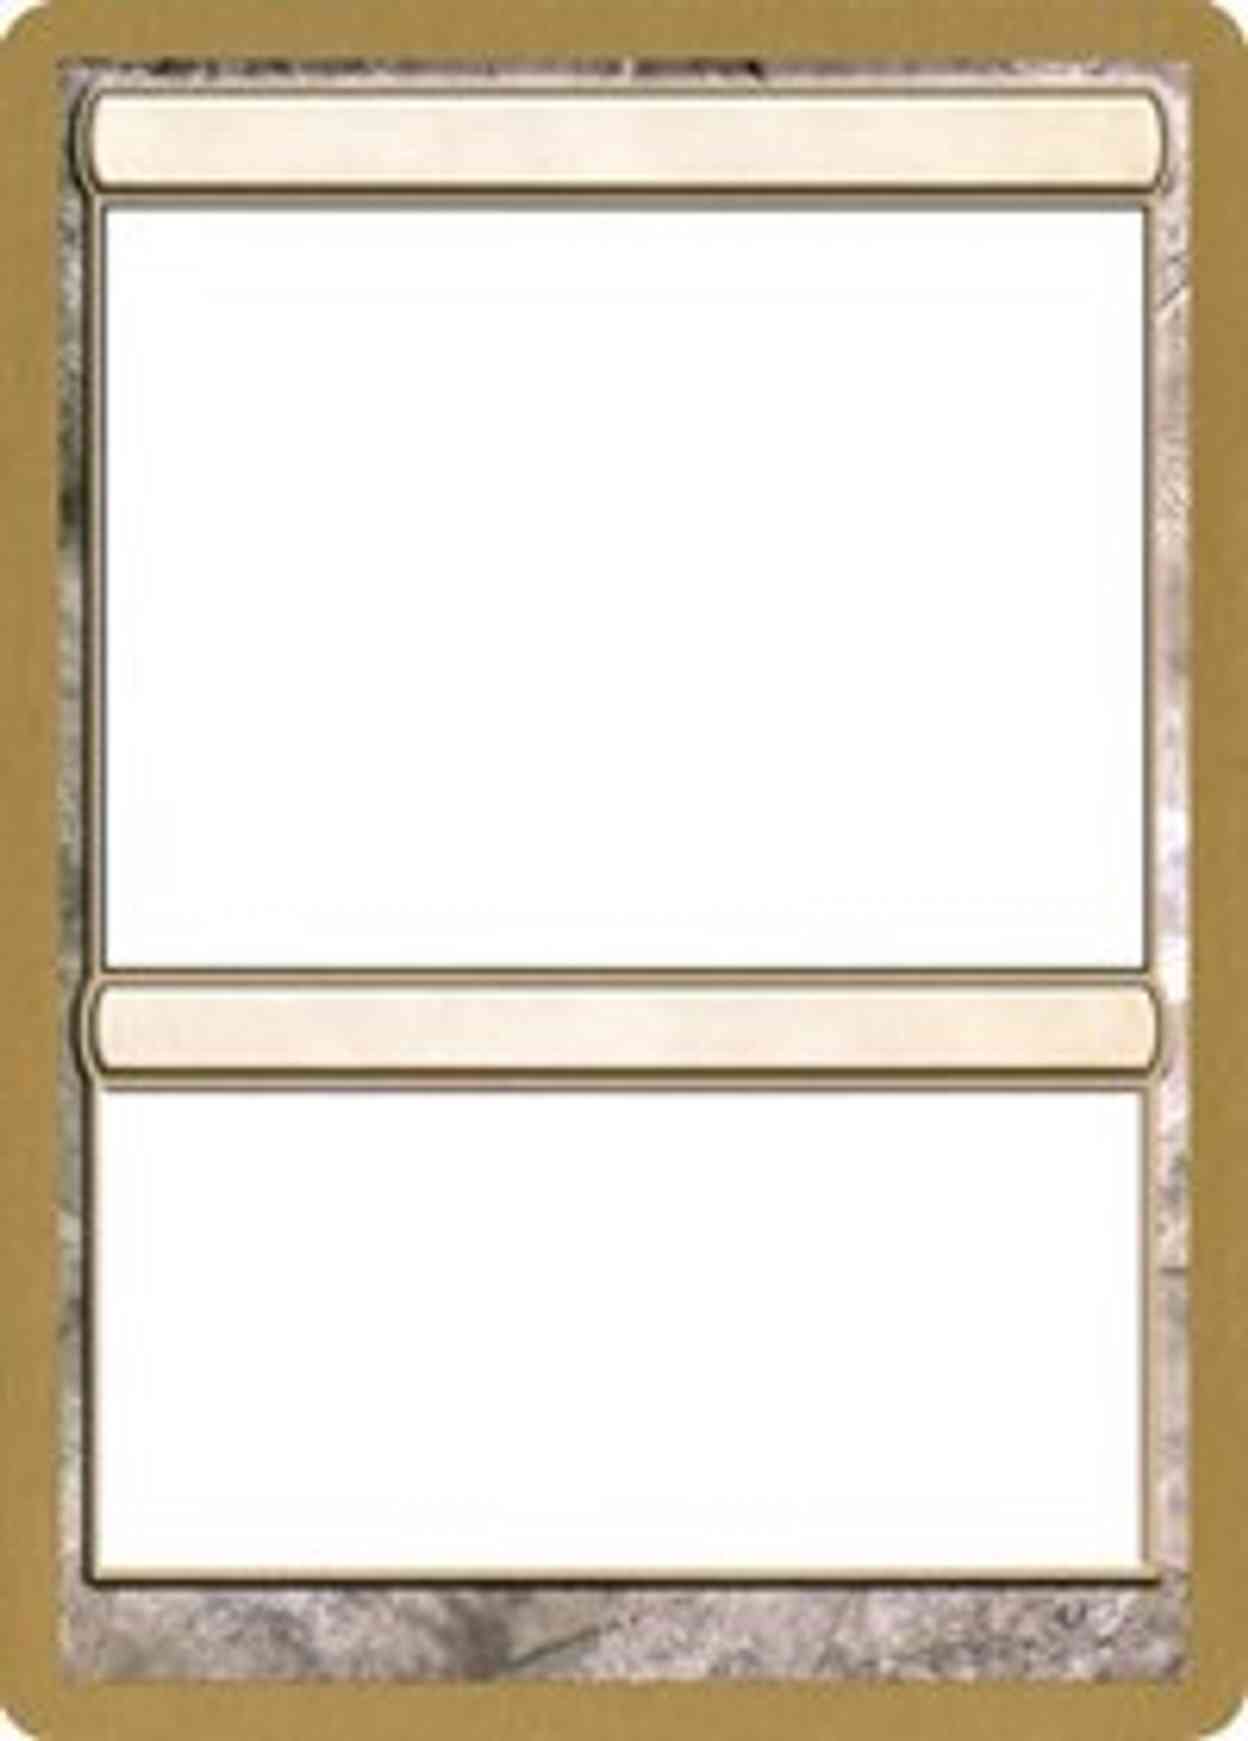 2004 World Championship Blank Card magic card front